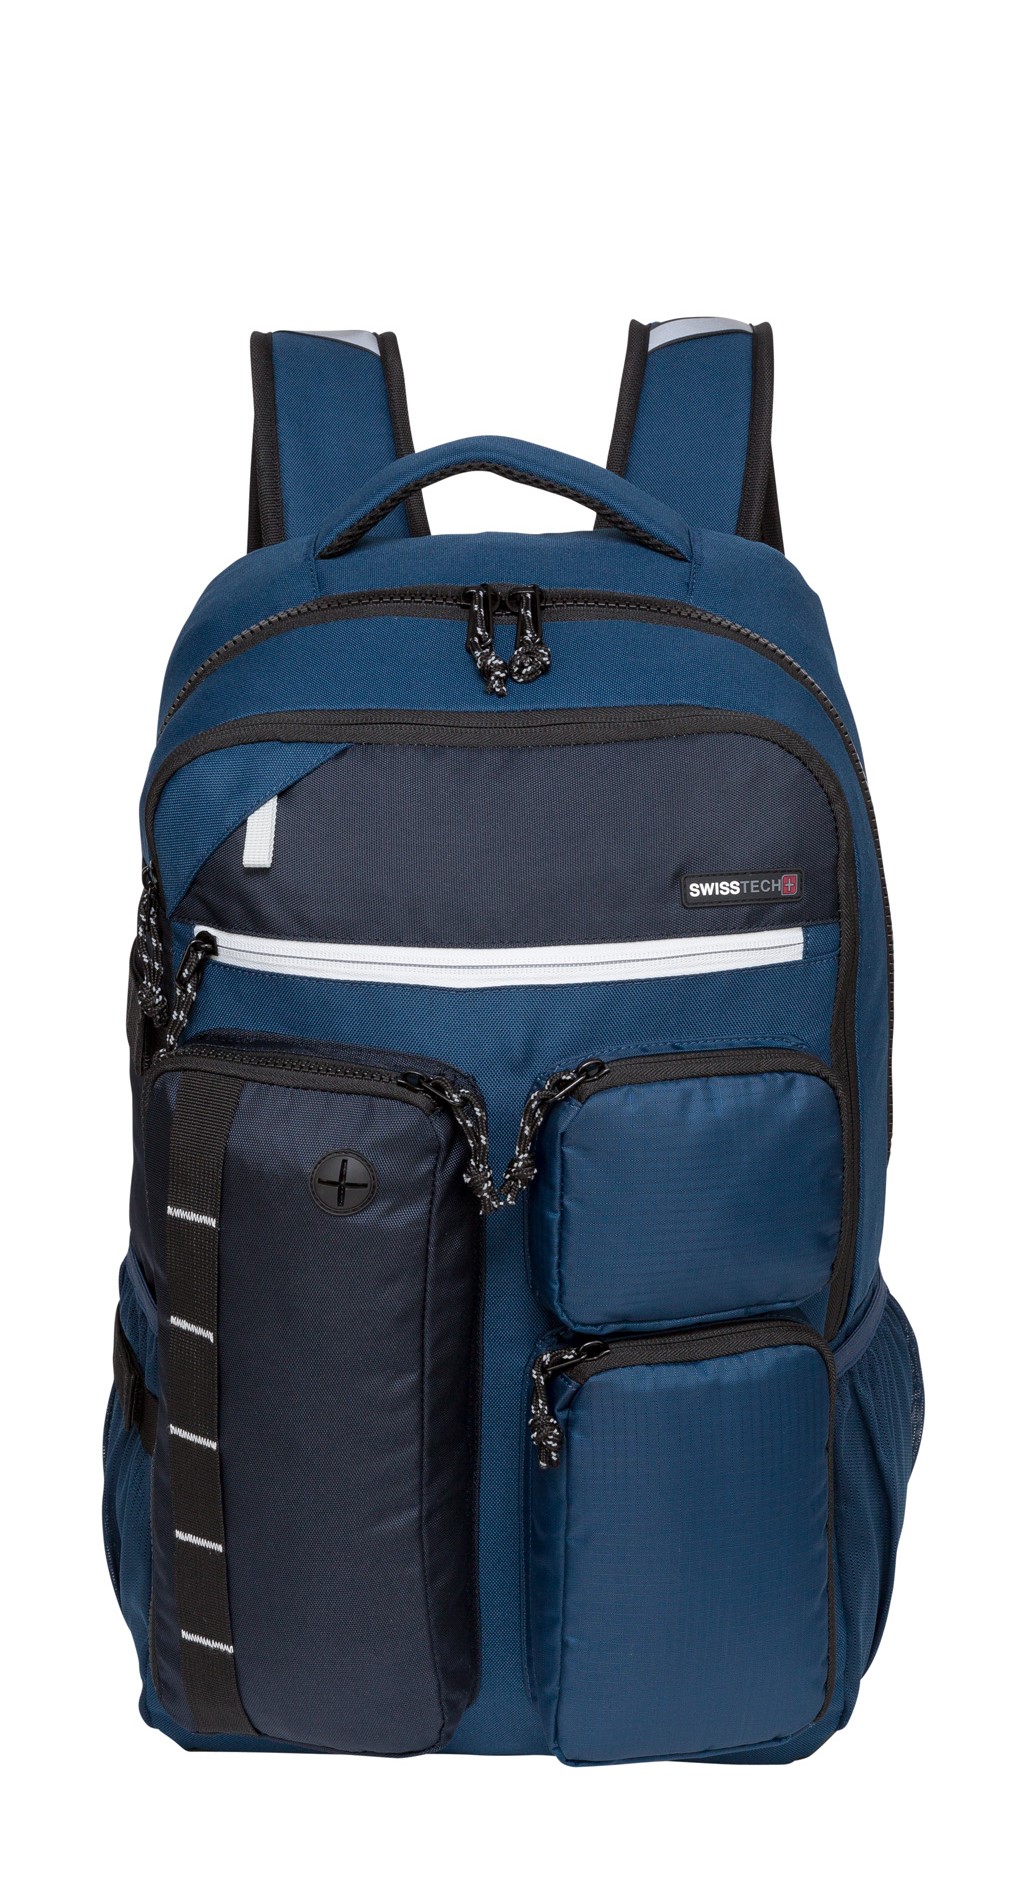 SwissTech Lucerne 34.4 L School Backpack Laptop Tablet Sleeve, Blue, Unisex, Adult, Teen, Polyester - image 5 of 9